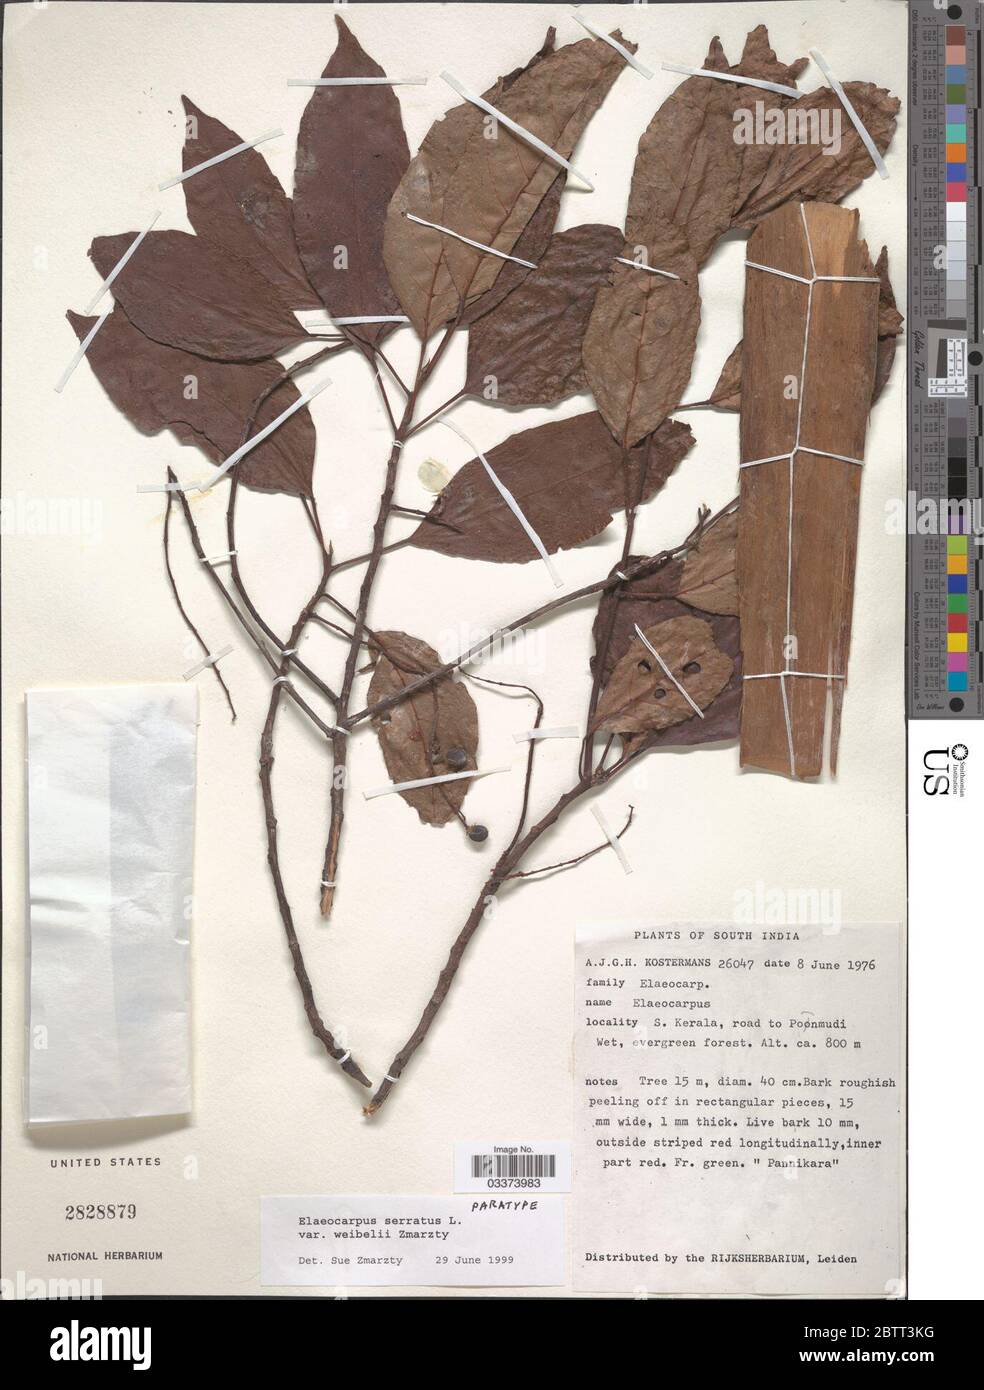 Elaeocarpus serratus var weibelii Zmarzty. Stock Photo